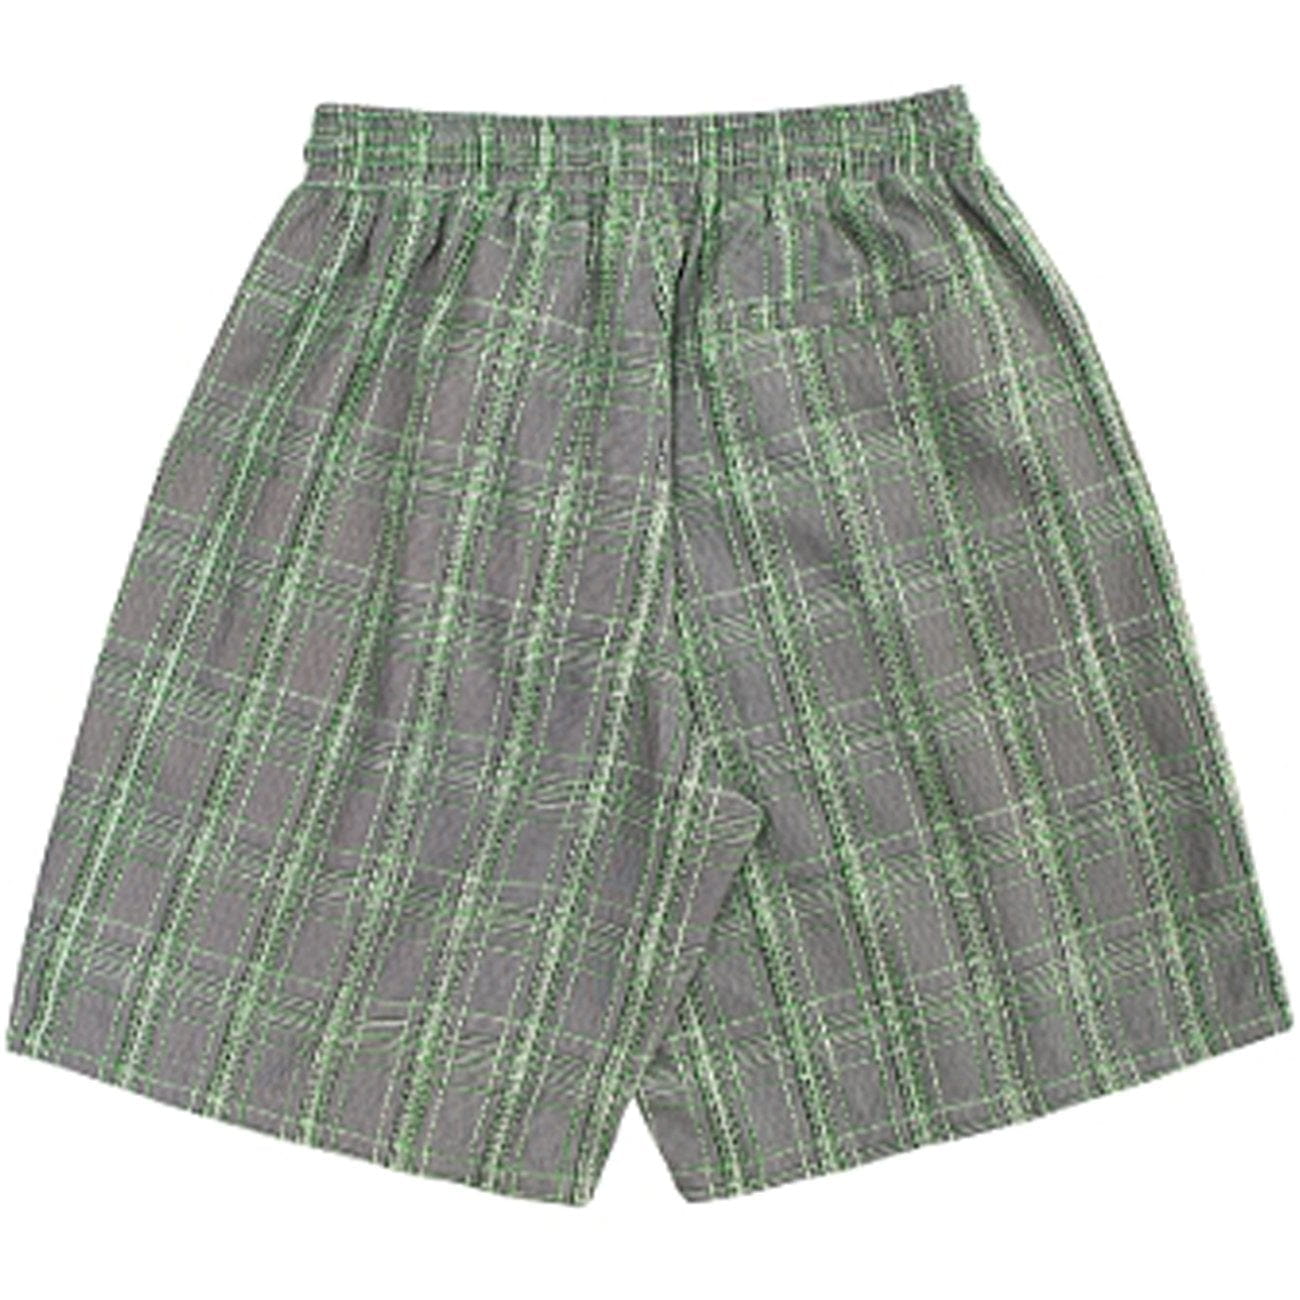 Plaid Pattern Shorts